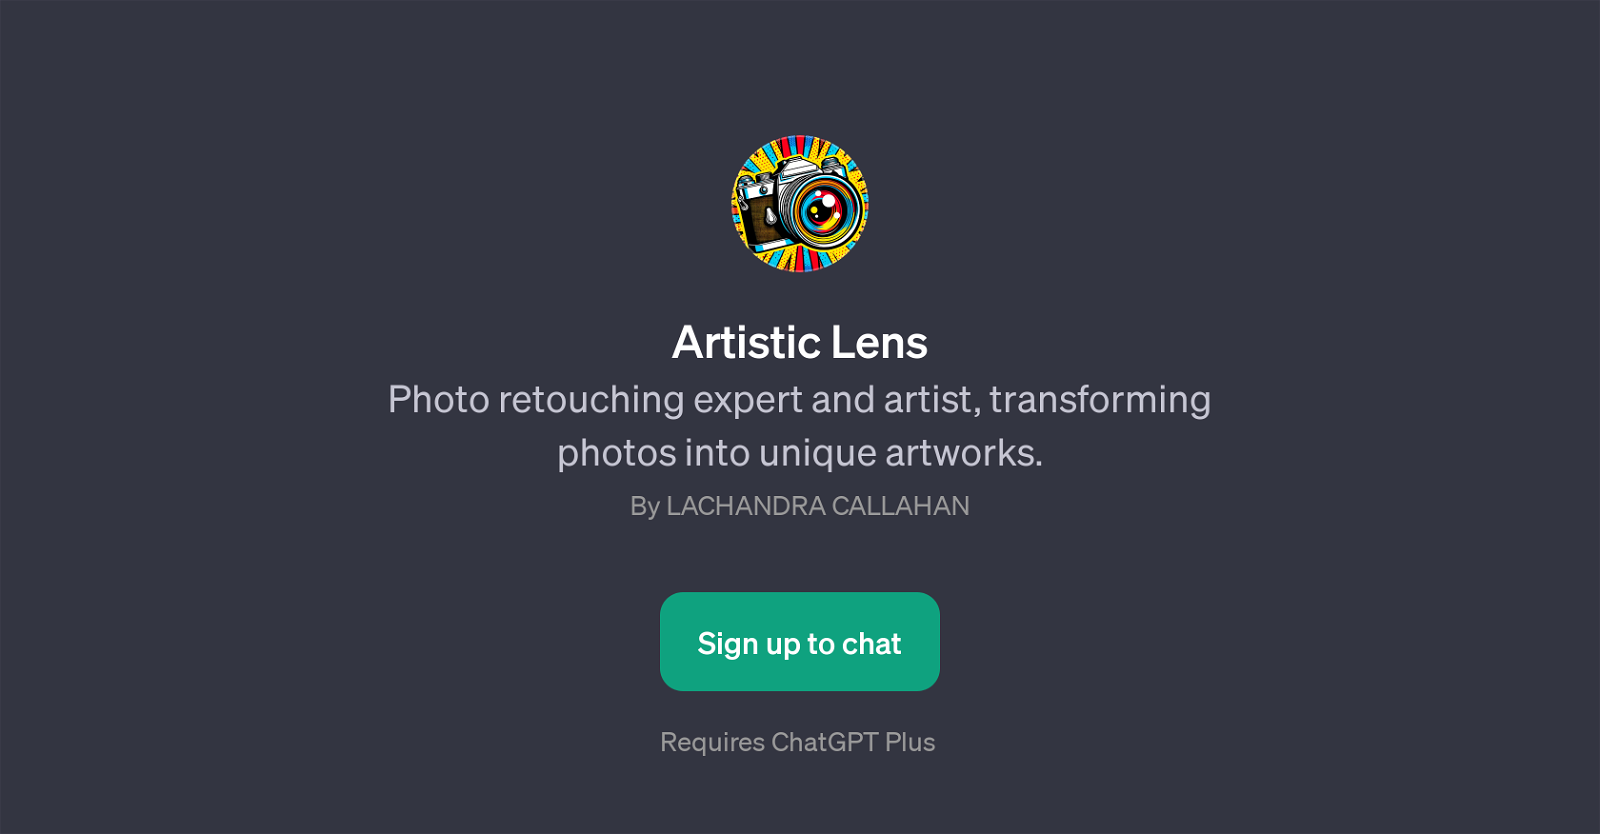 Artistic Lens website